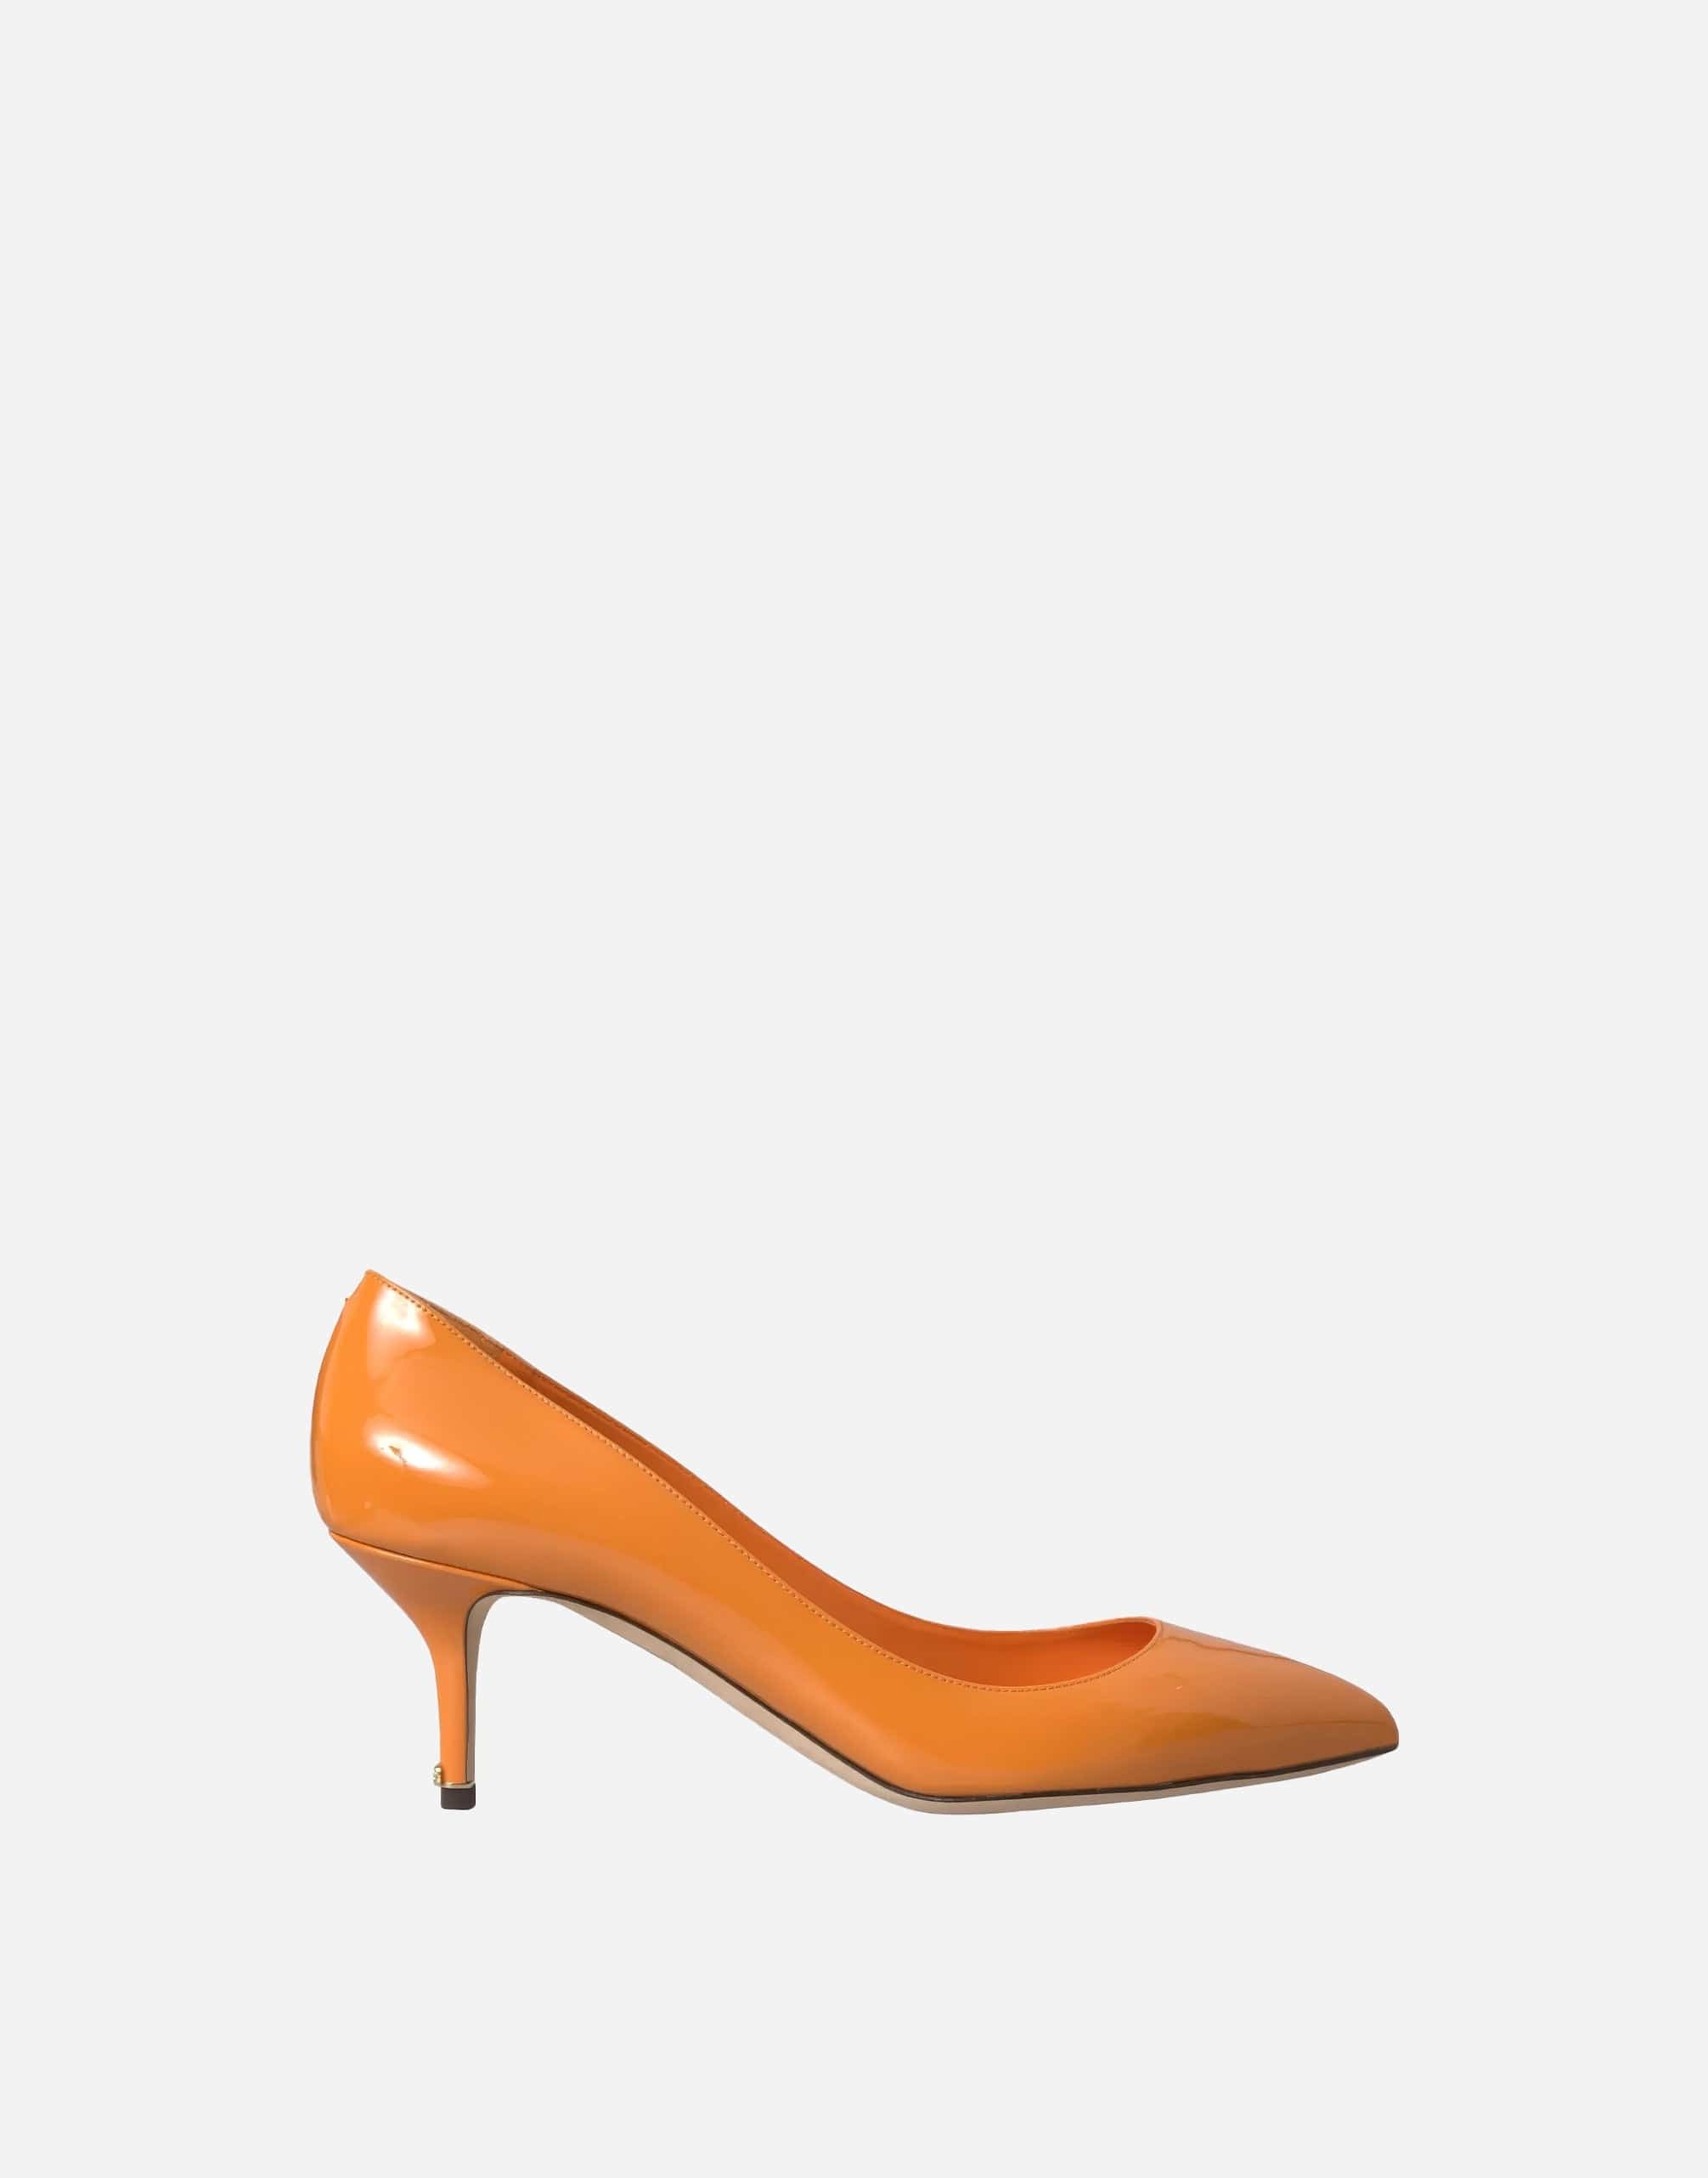 Dolce & Gabbana Orange Patent Leather Pumps